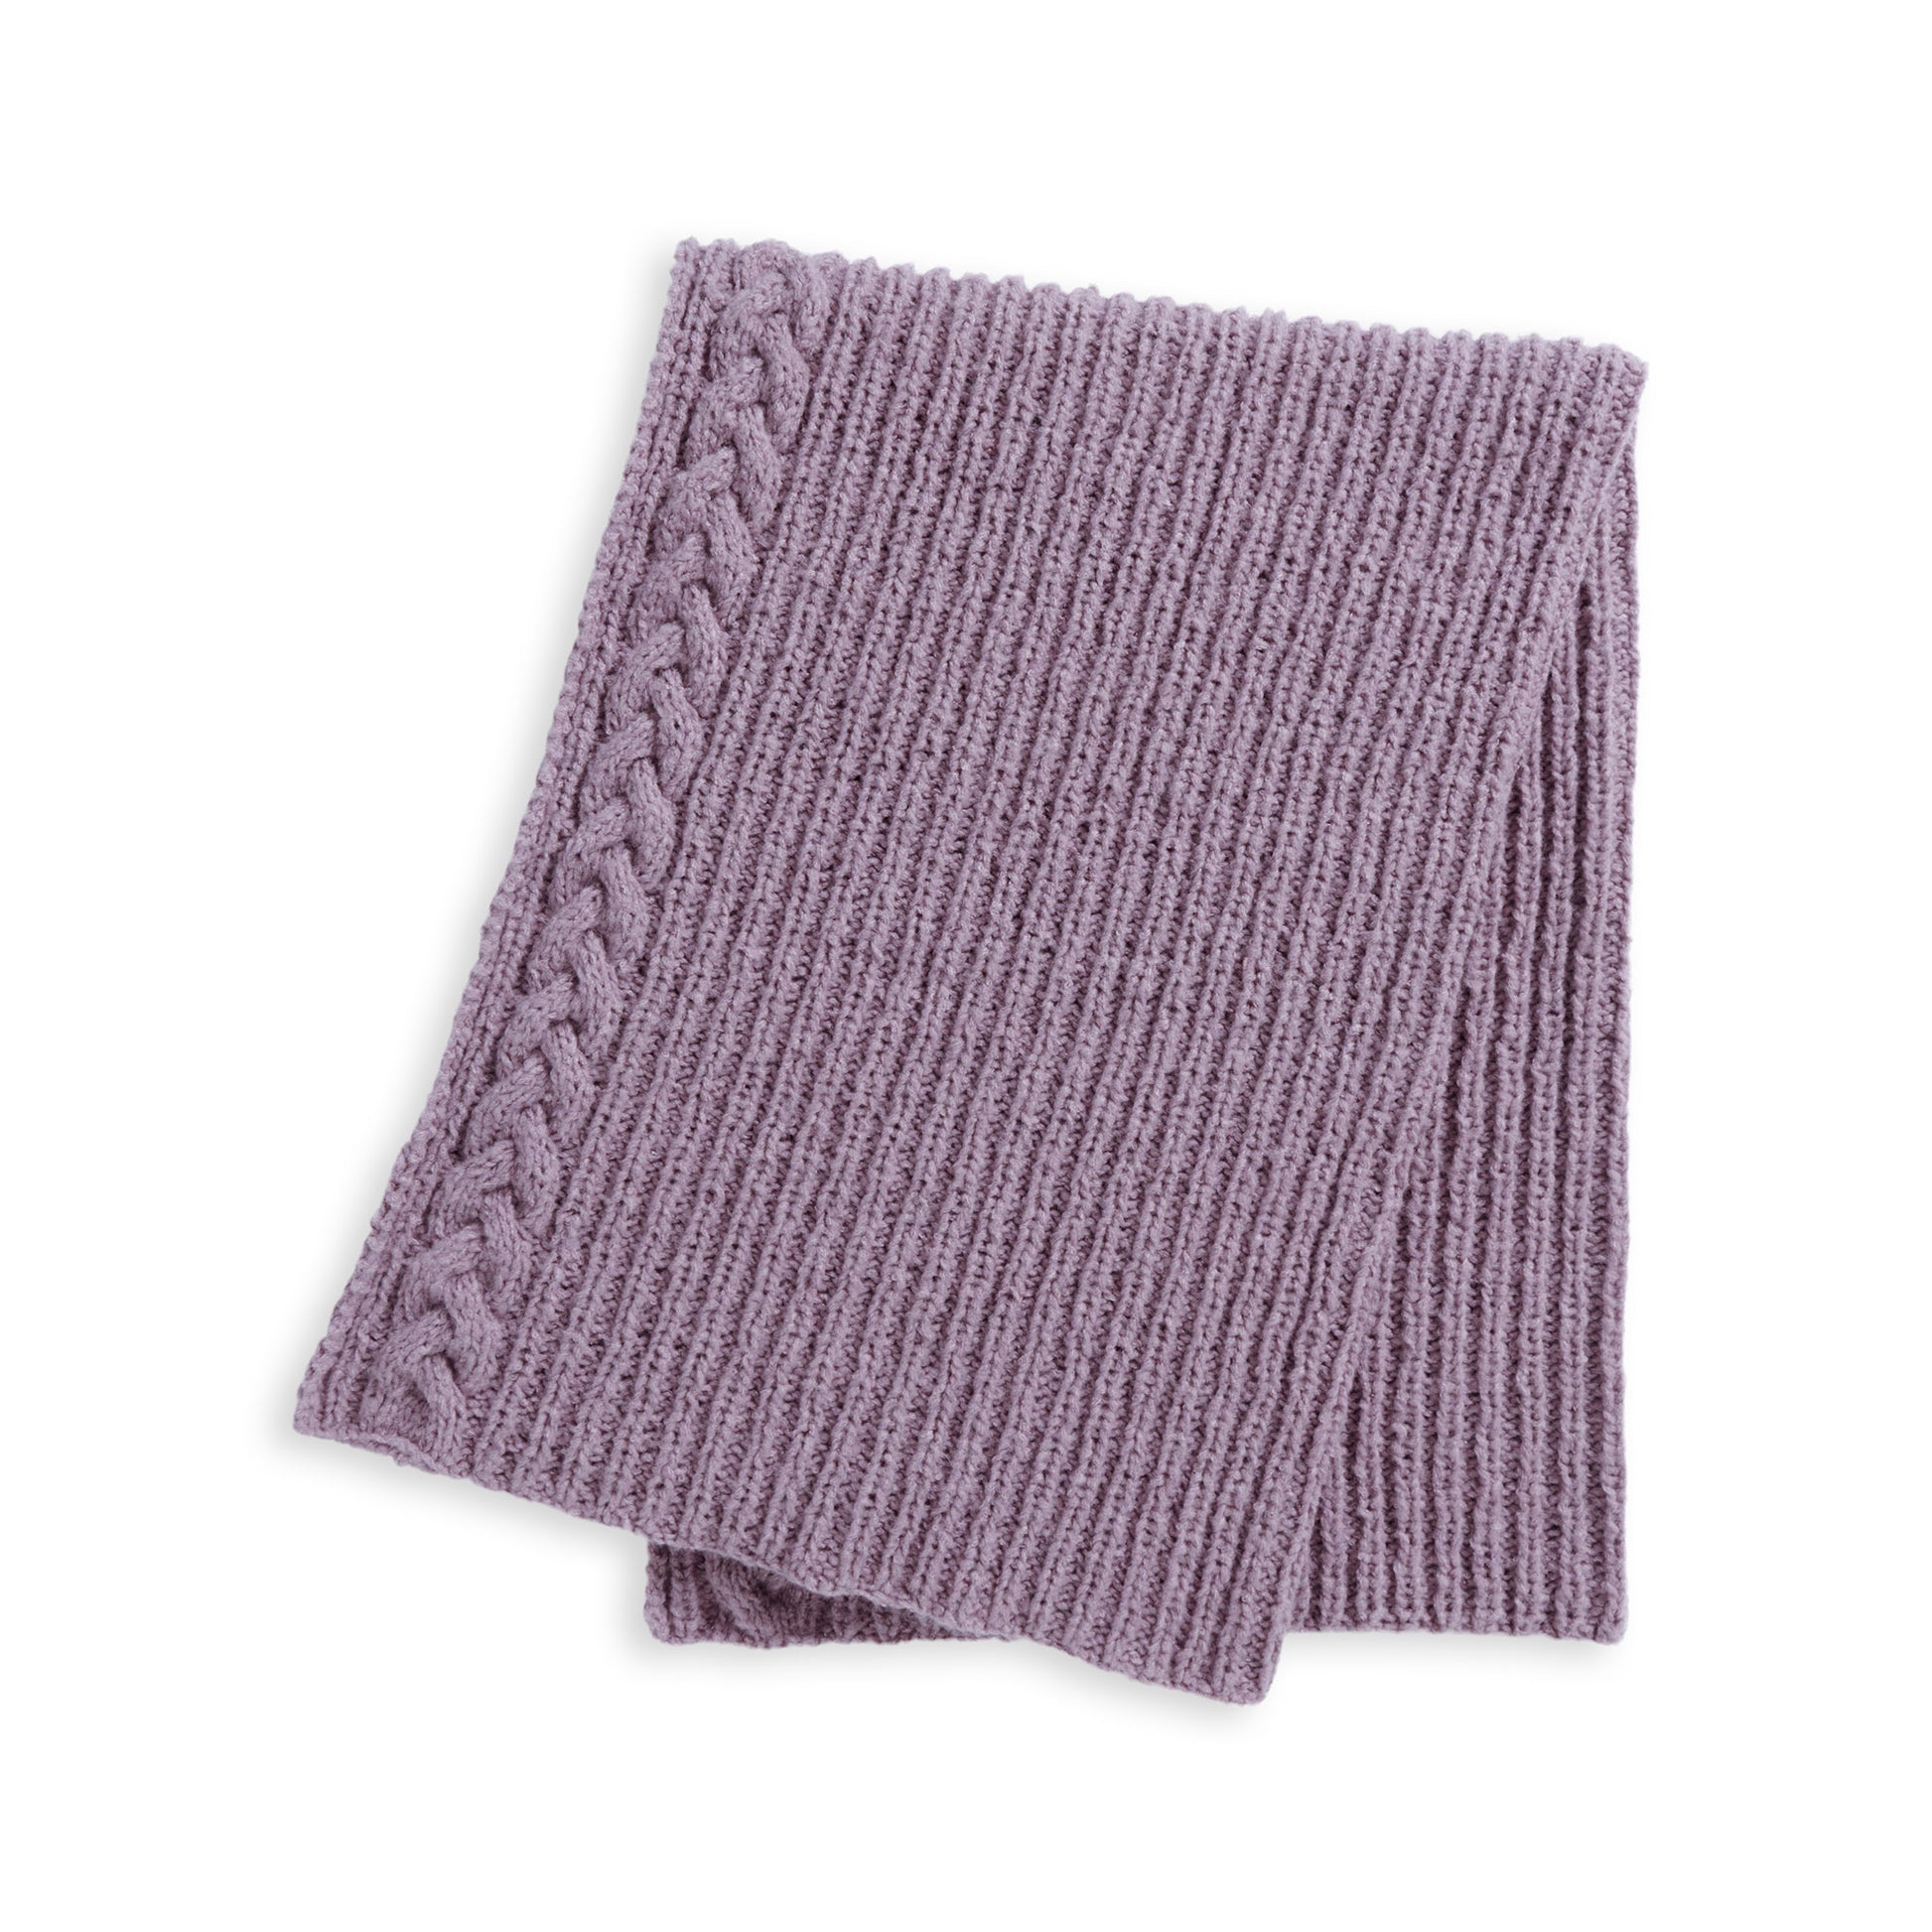 Free Bernat Lots of Ribs & Cable Edges Knit Blanket Pattern